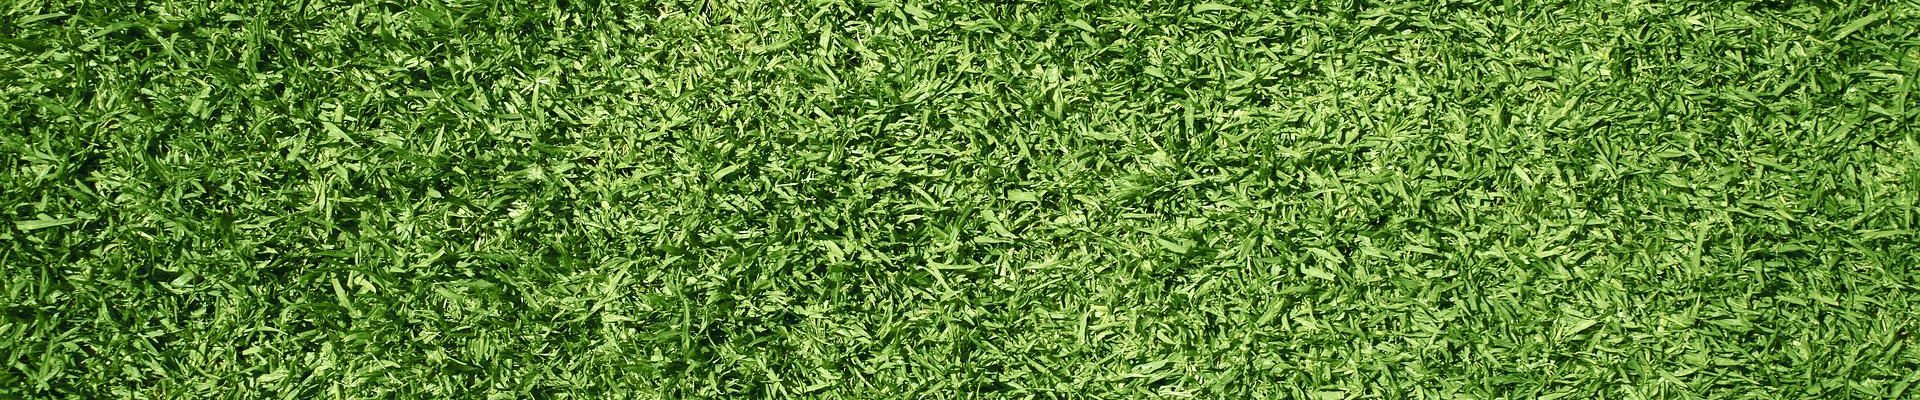 artificial grass for schools